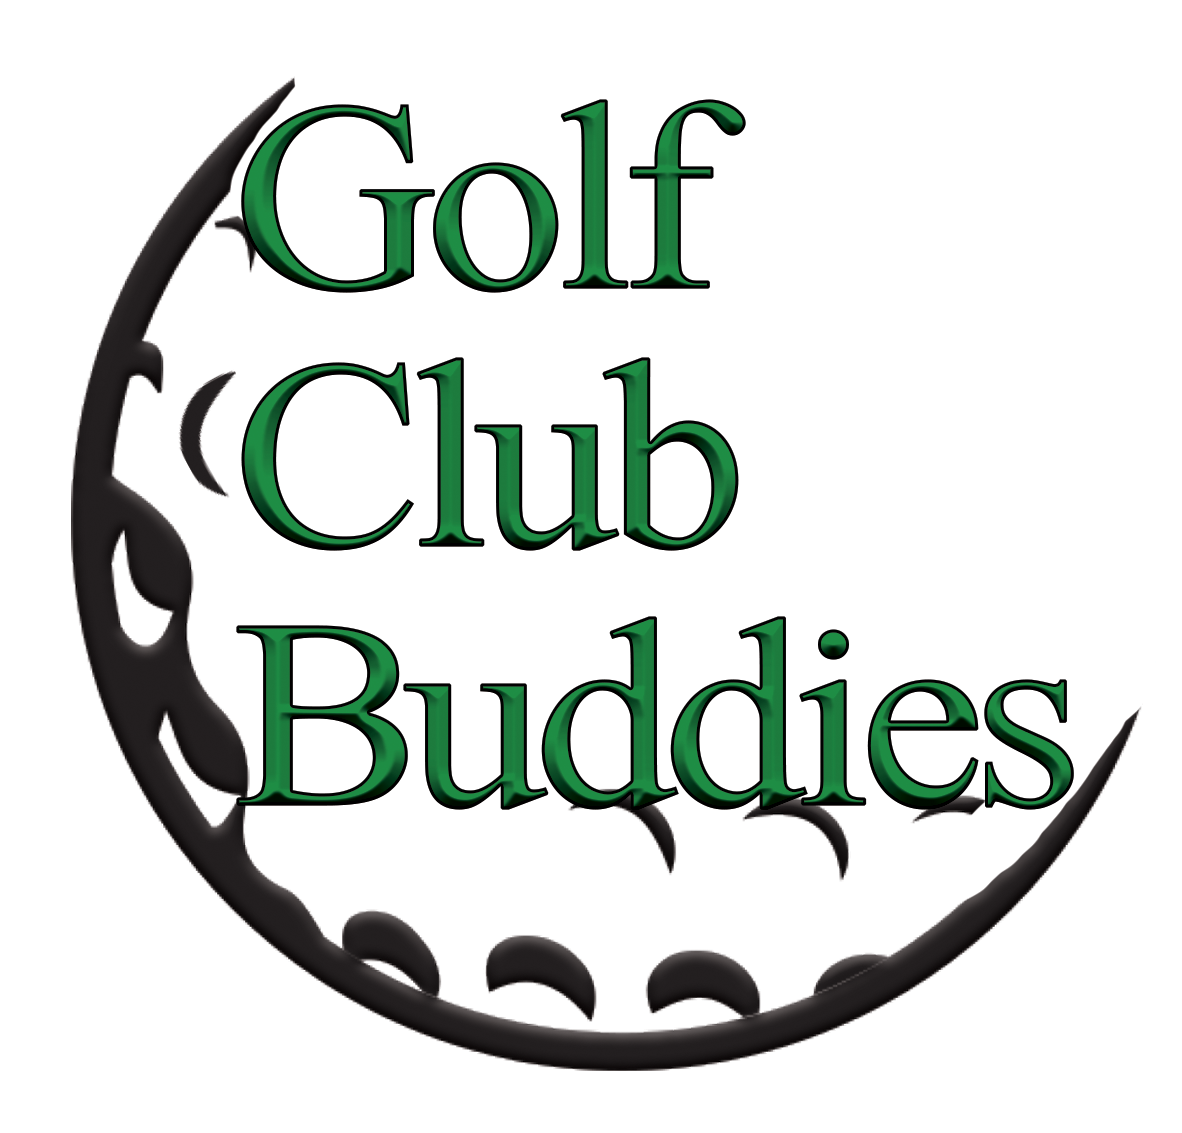 Golf Club Buddies logo final.png